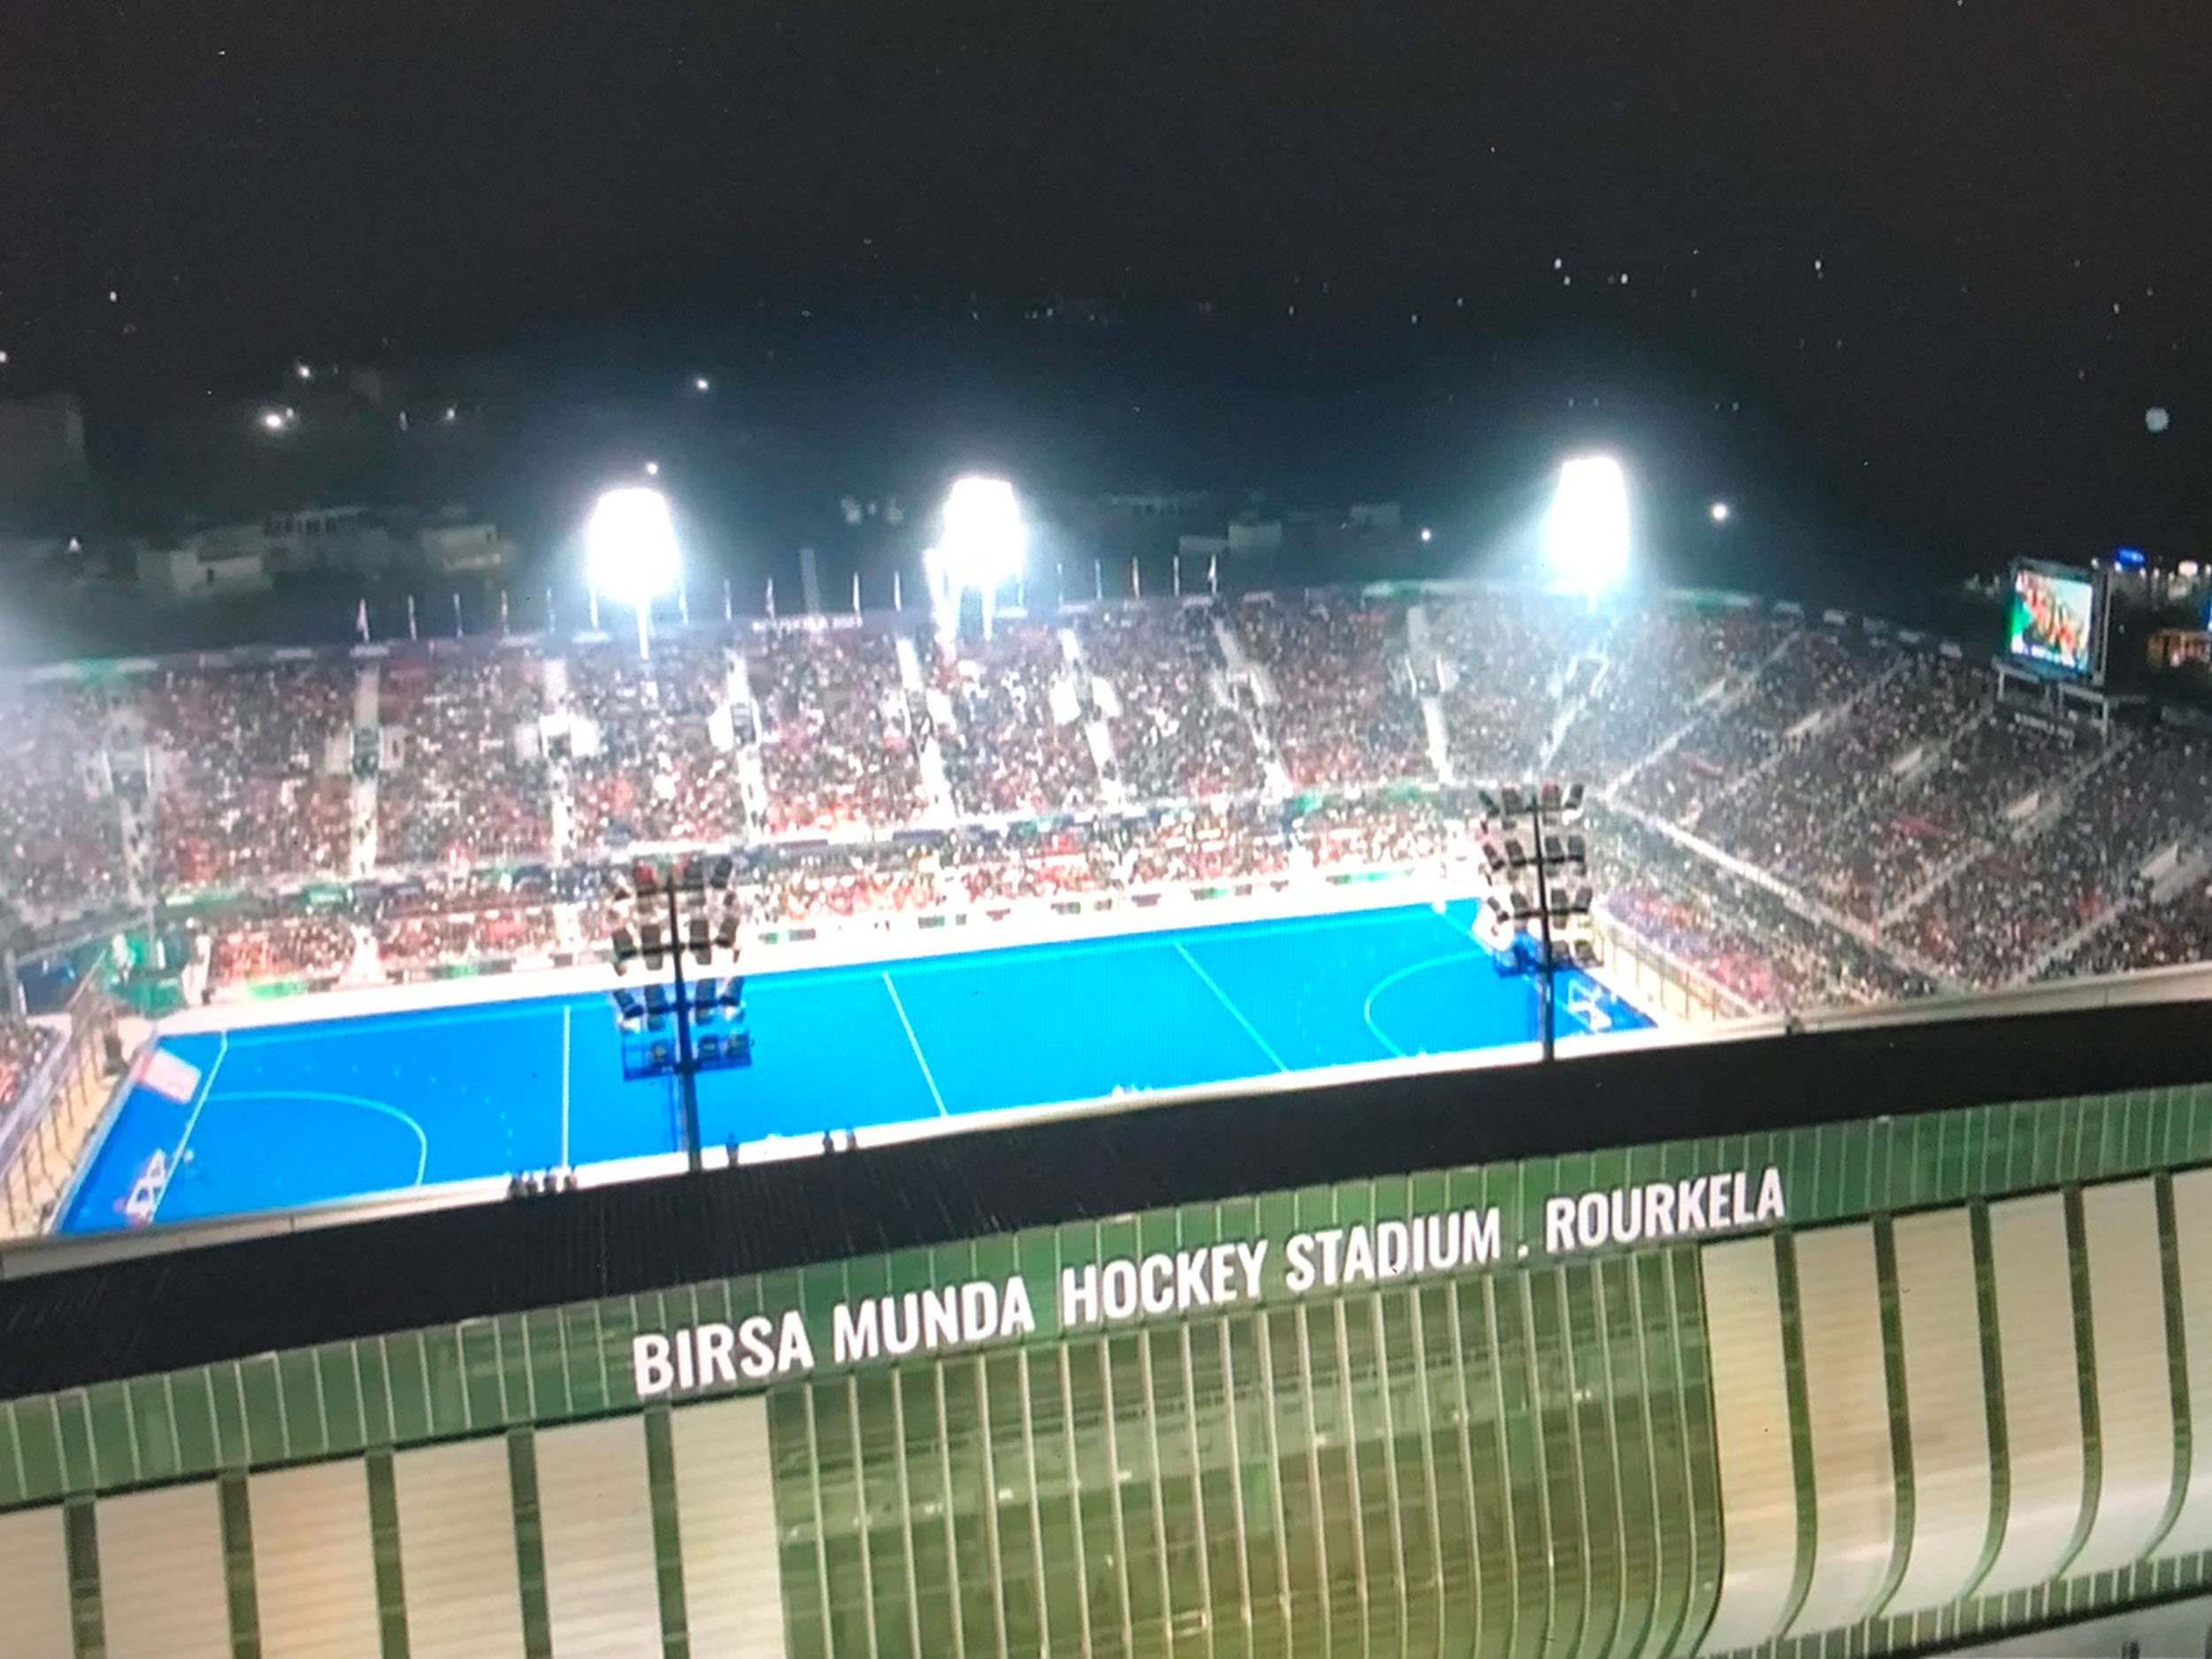 Birsa Munda Hockey Stadium, Rourkela, India